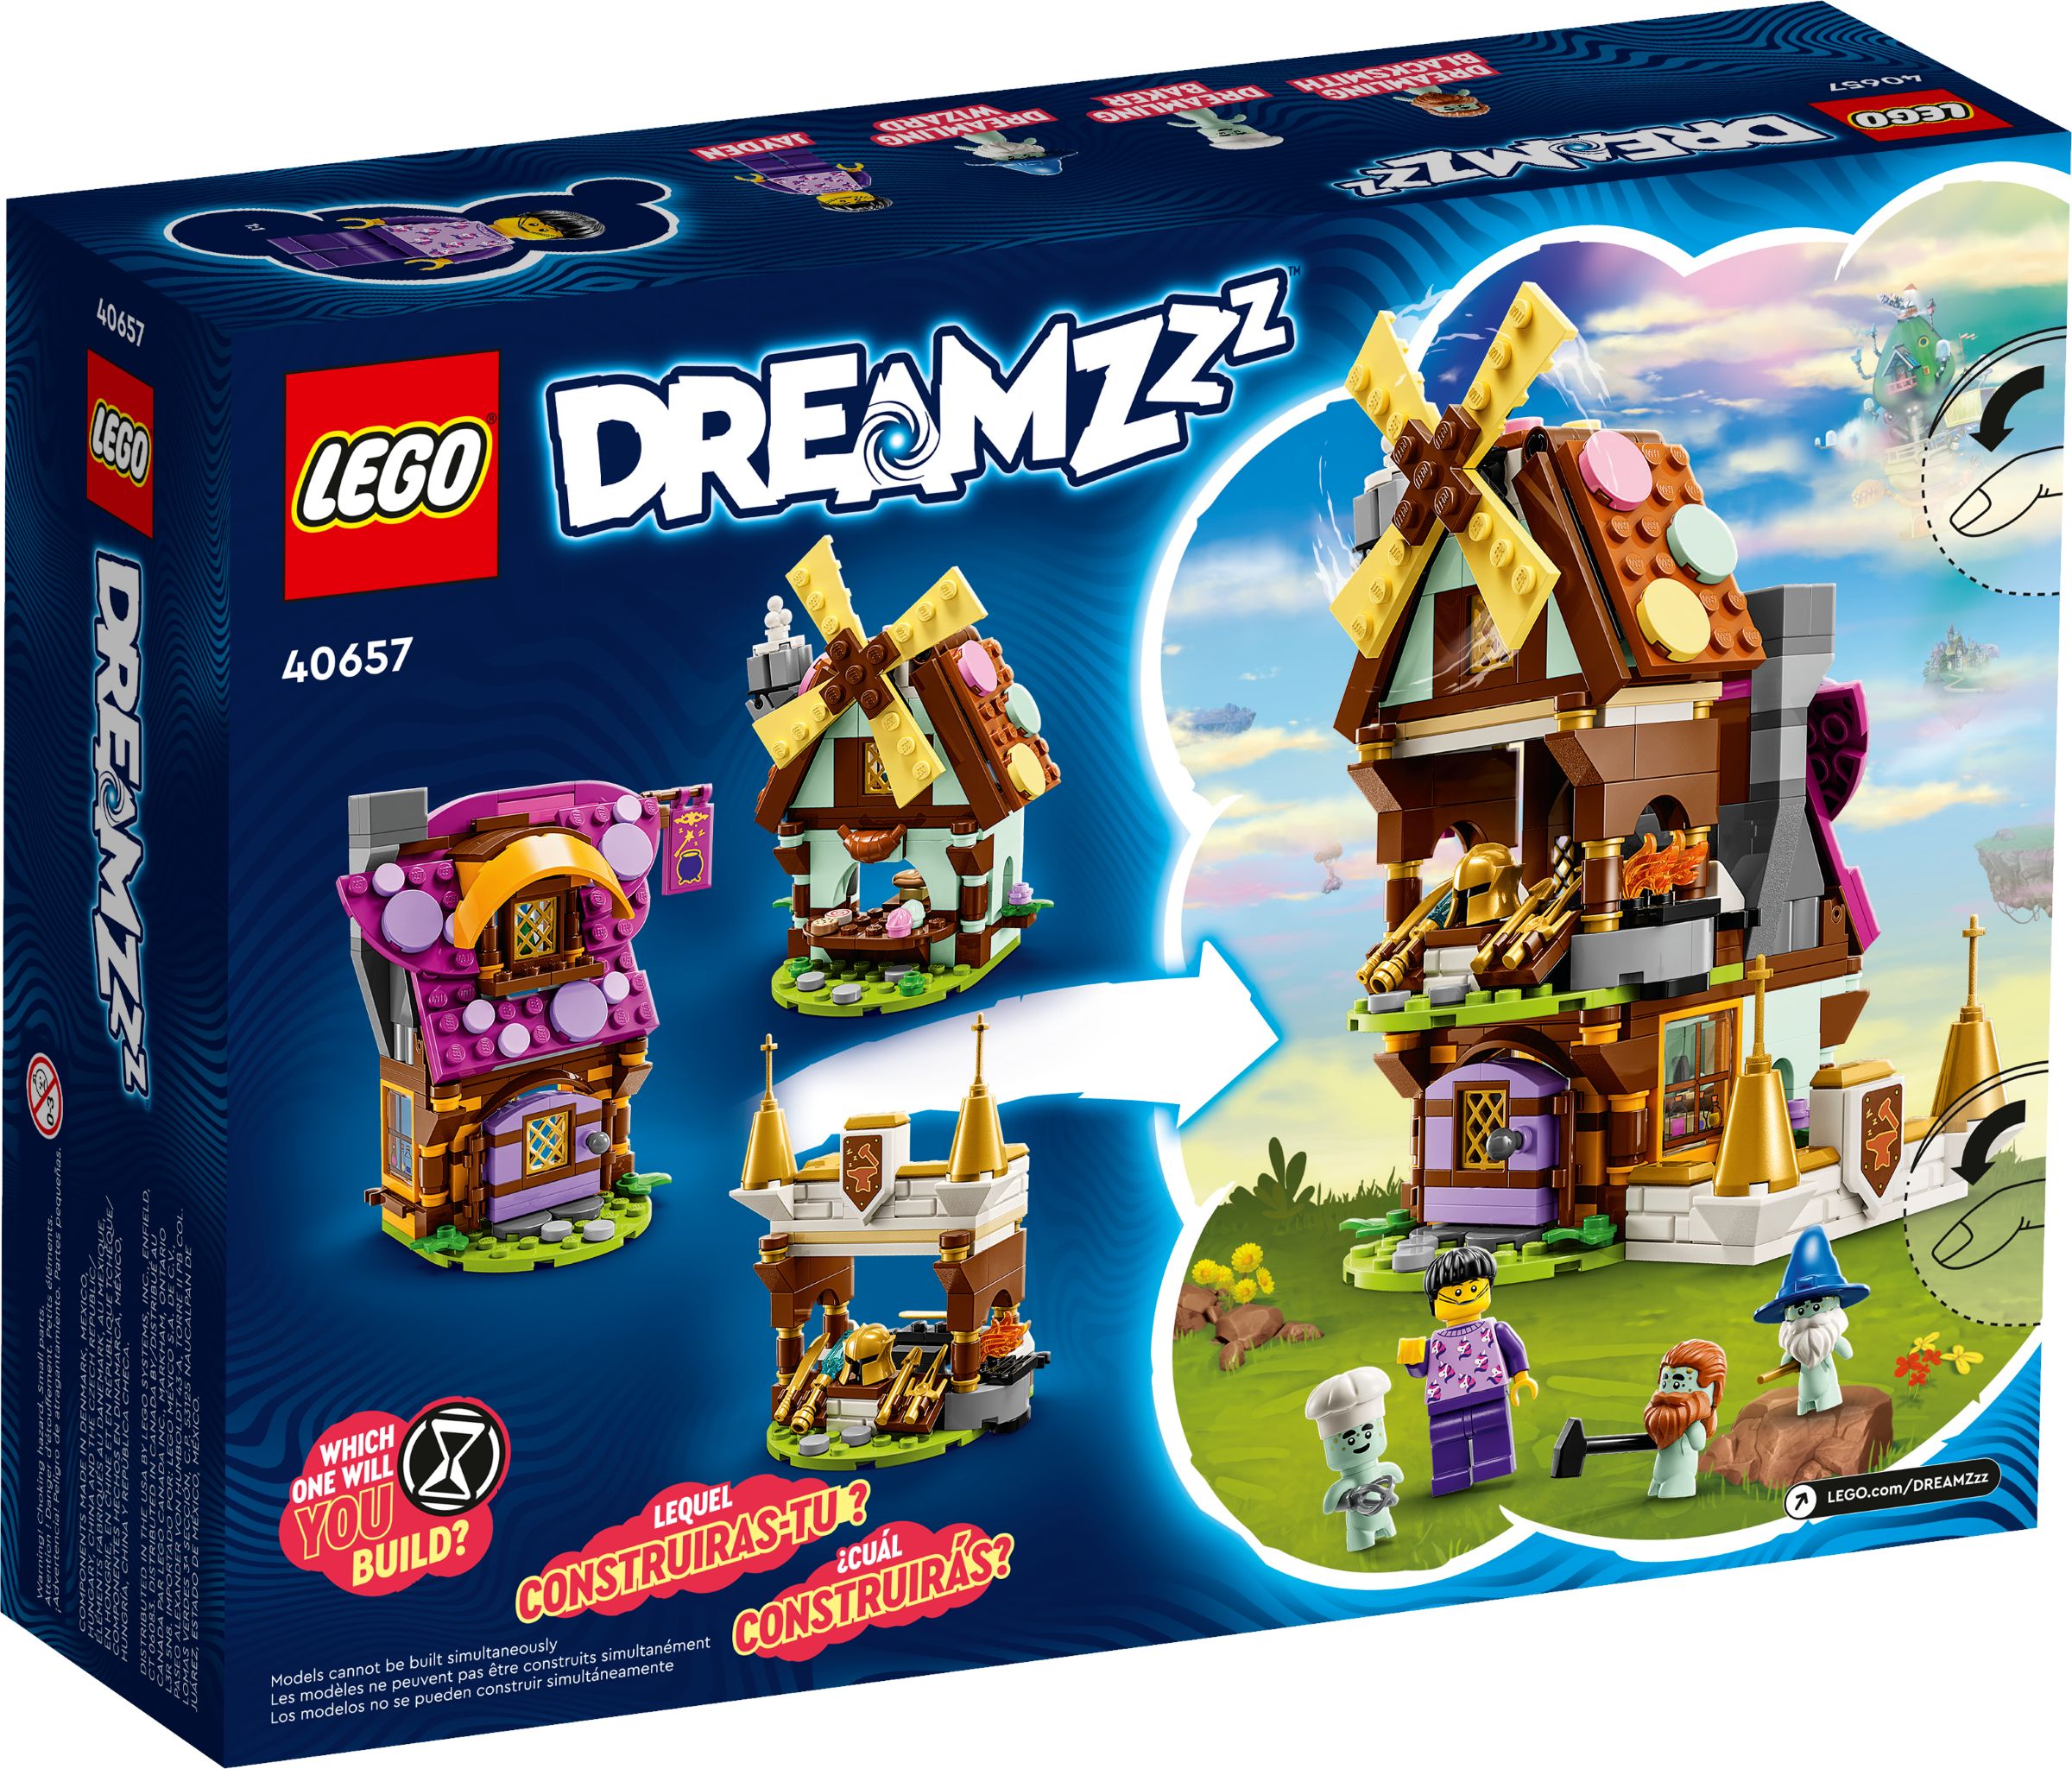 LEGO Dreamzzz 40657 Traumdorf LEGO_40657_alt2.jpg